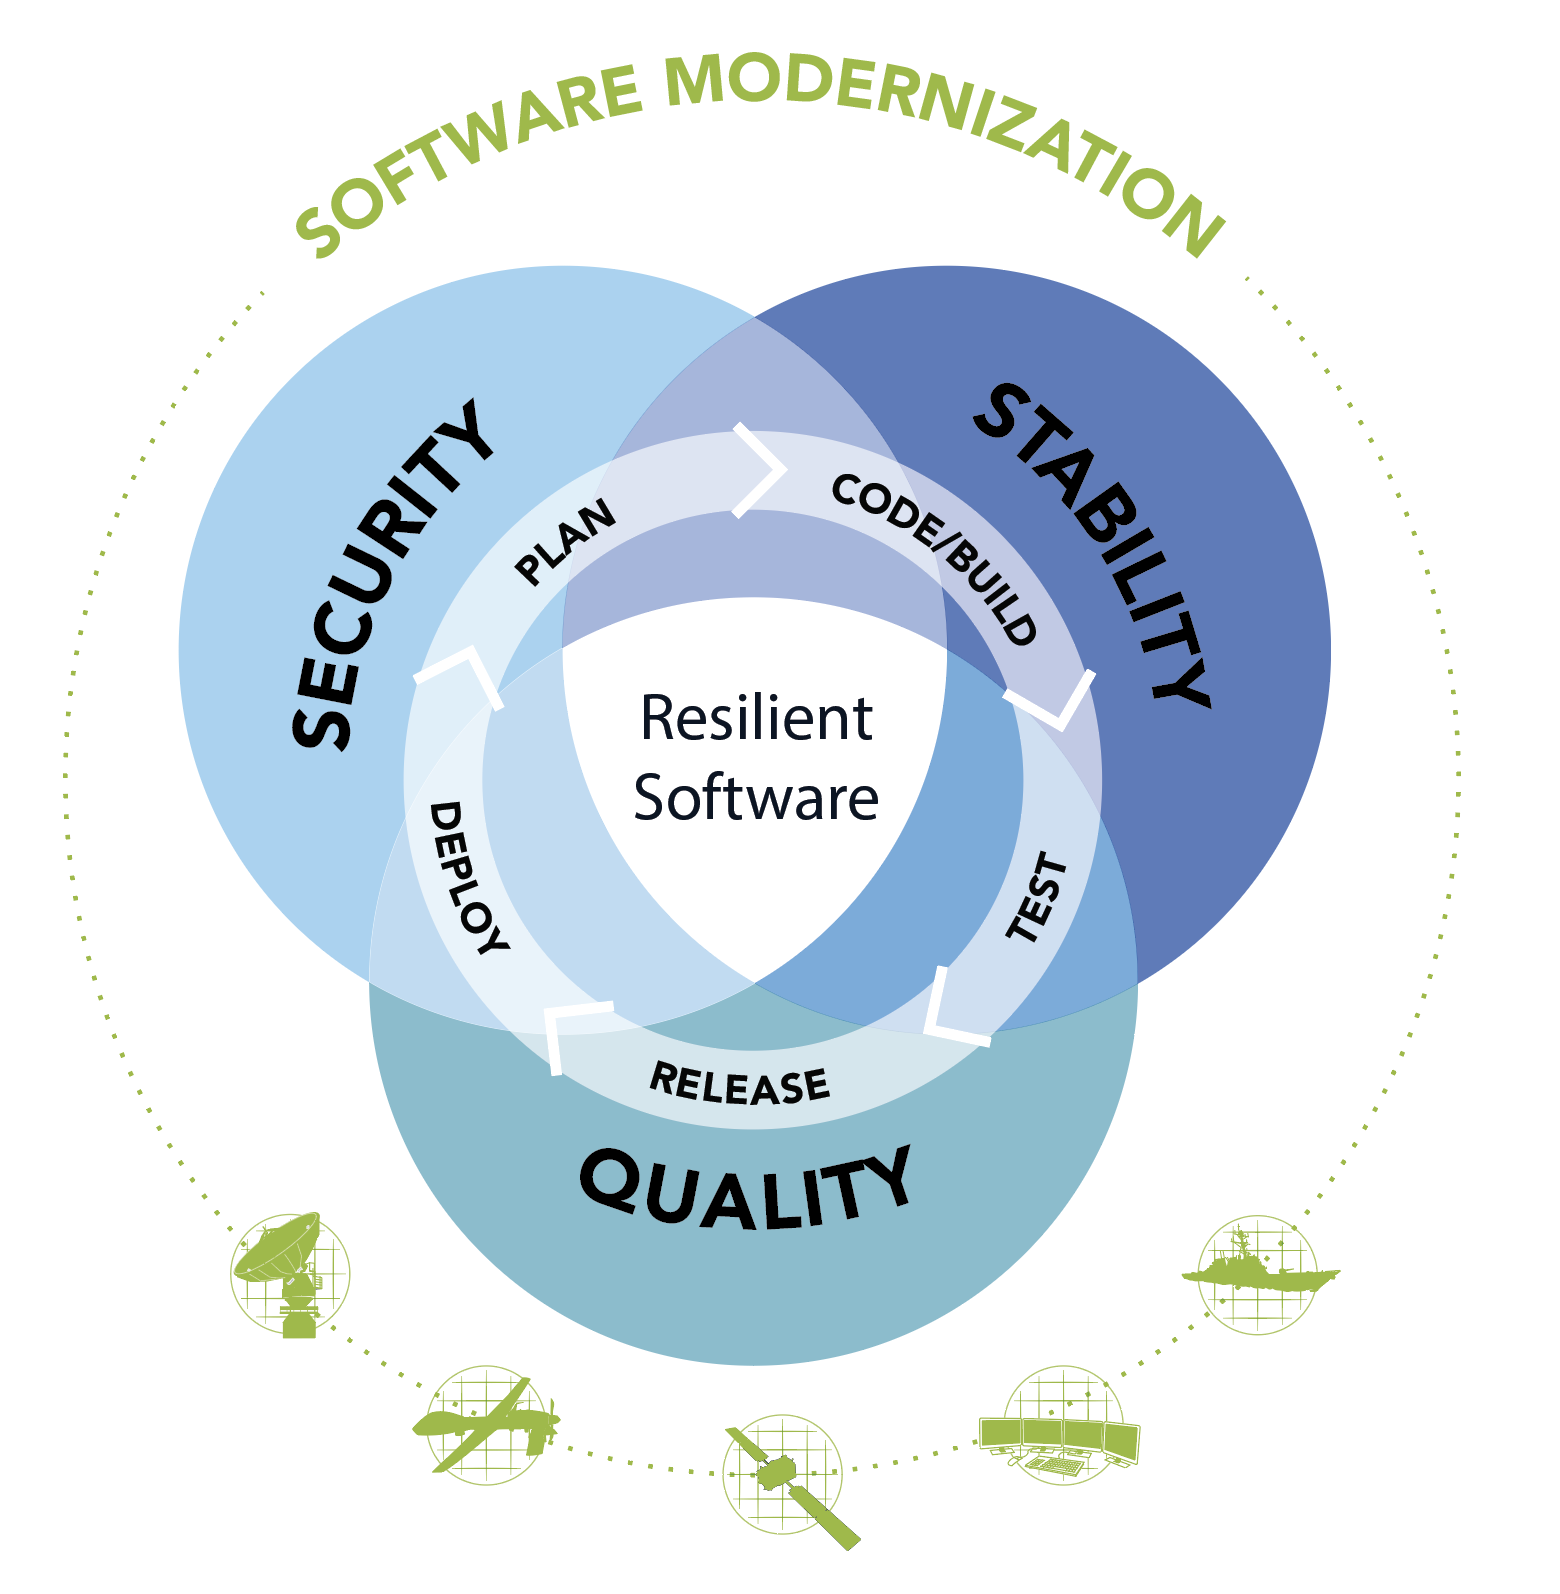 A diagram of SDL’s software modernization approach.